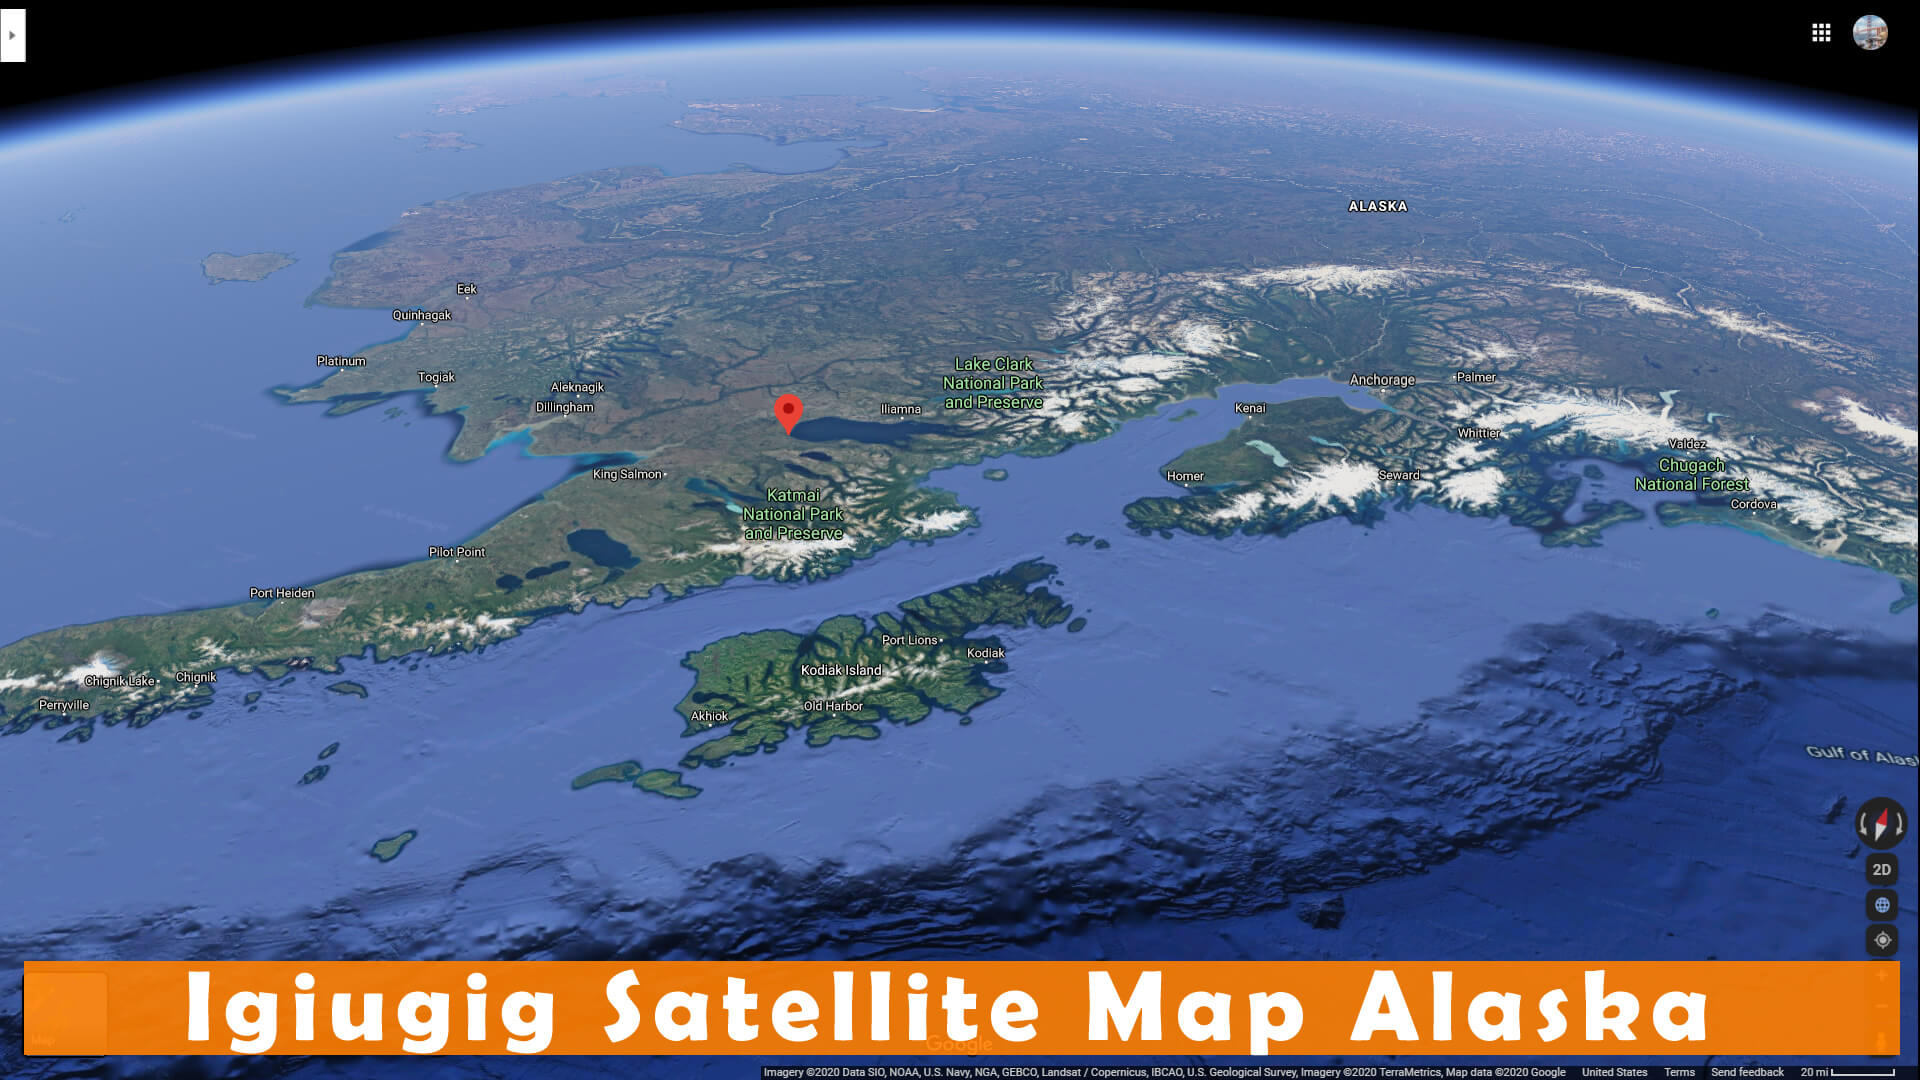 Igiugig Satellite Carte Alaska